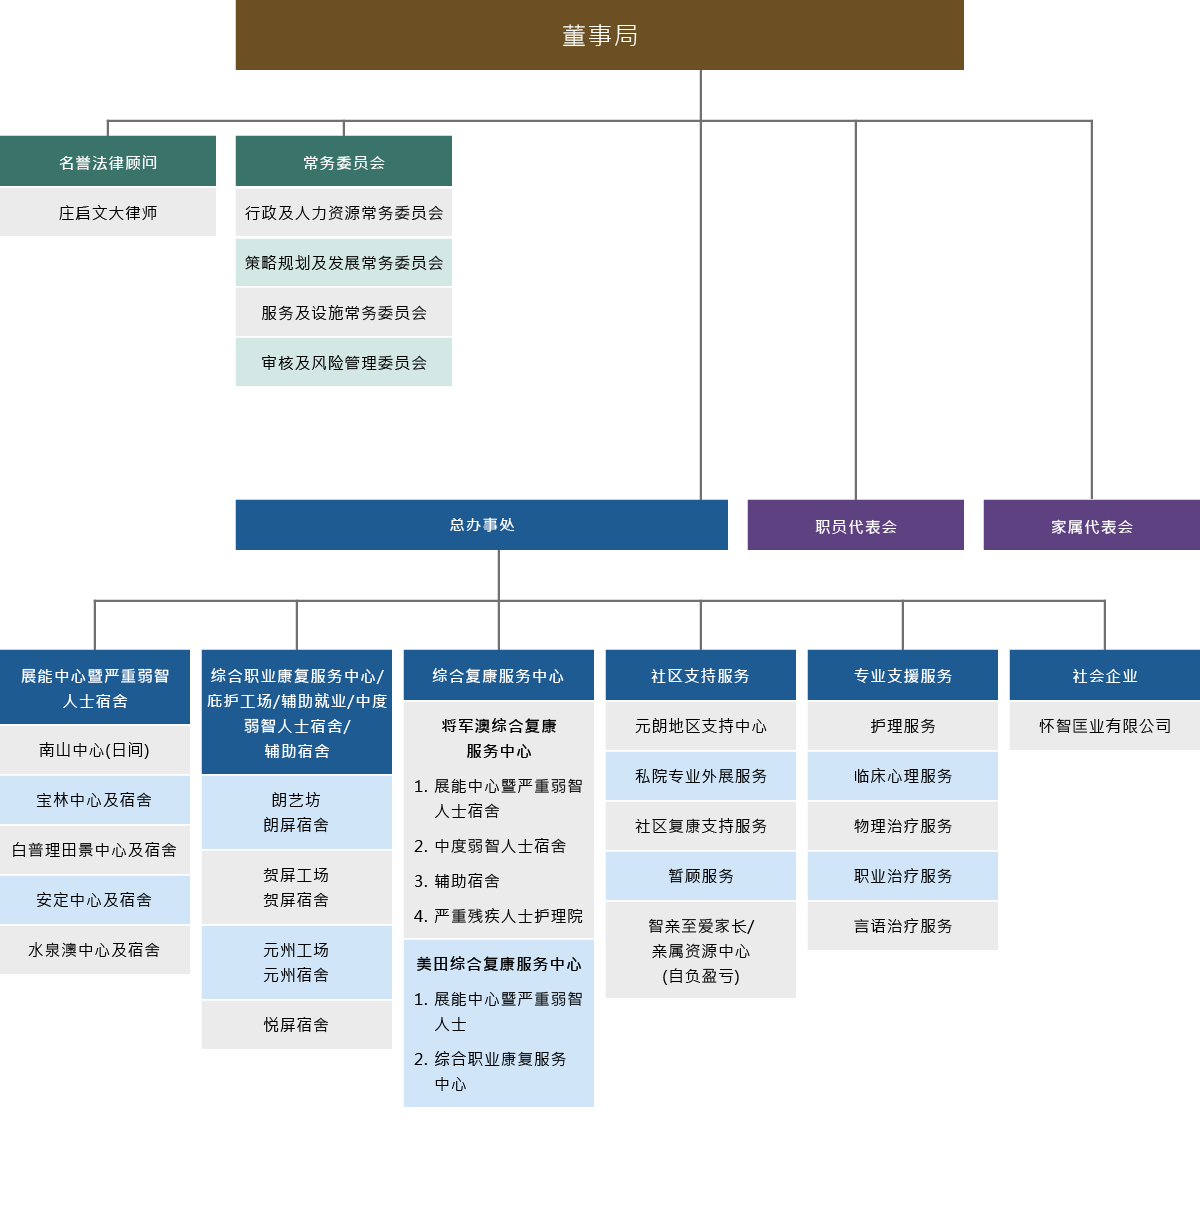 Self Photos / Files - Organization Chart_Desktop_Simplified Chinese_20231201